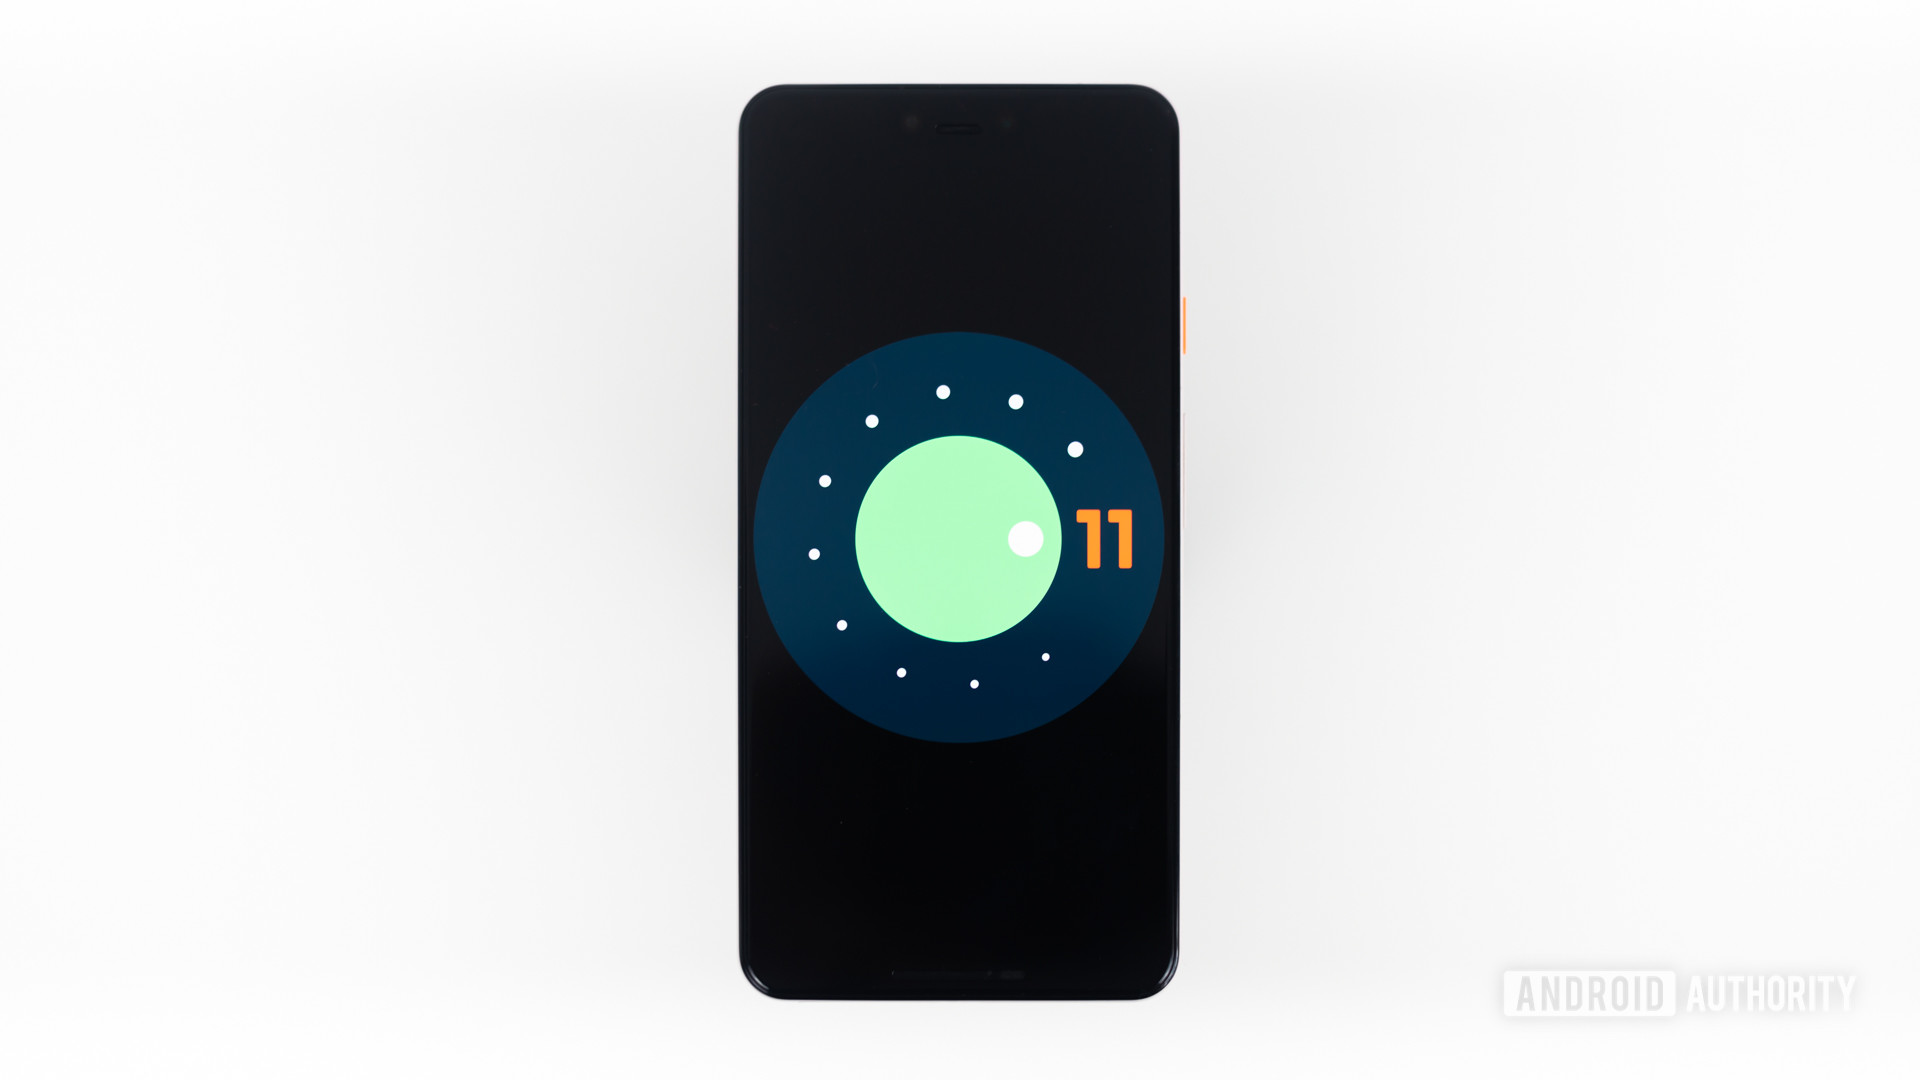 Android 11 logo stock photo 6